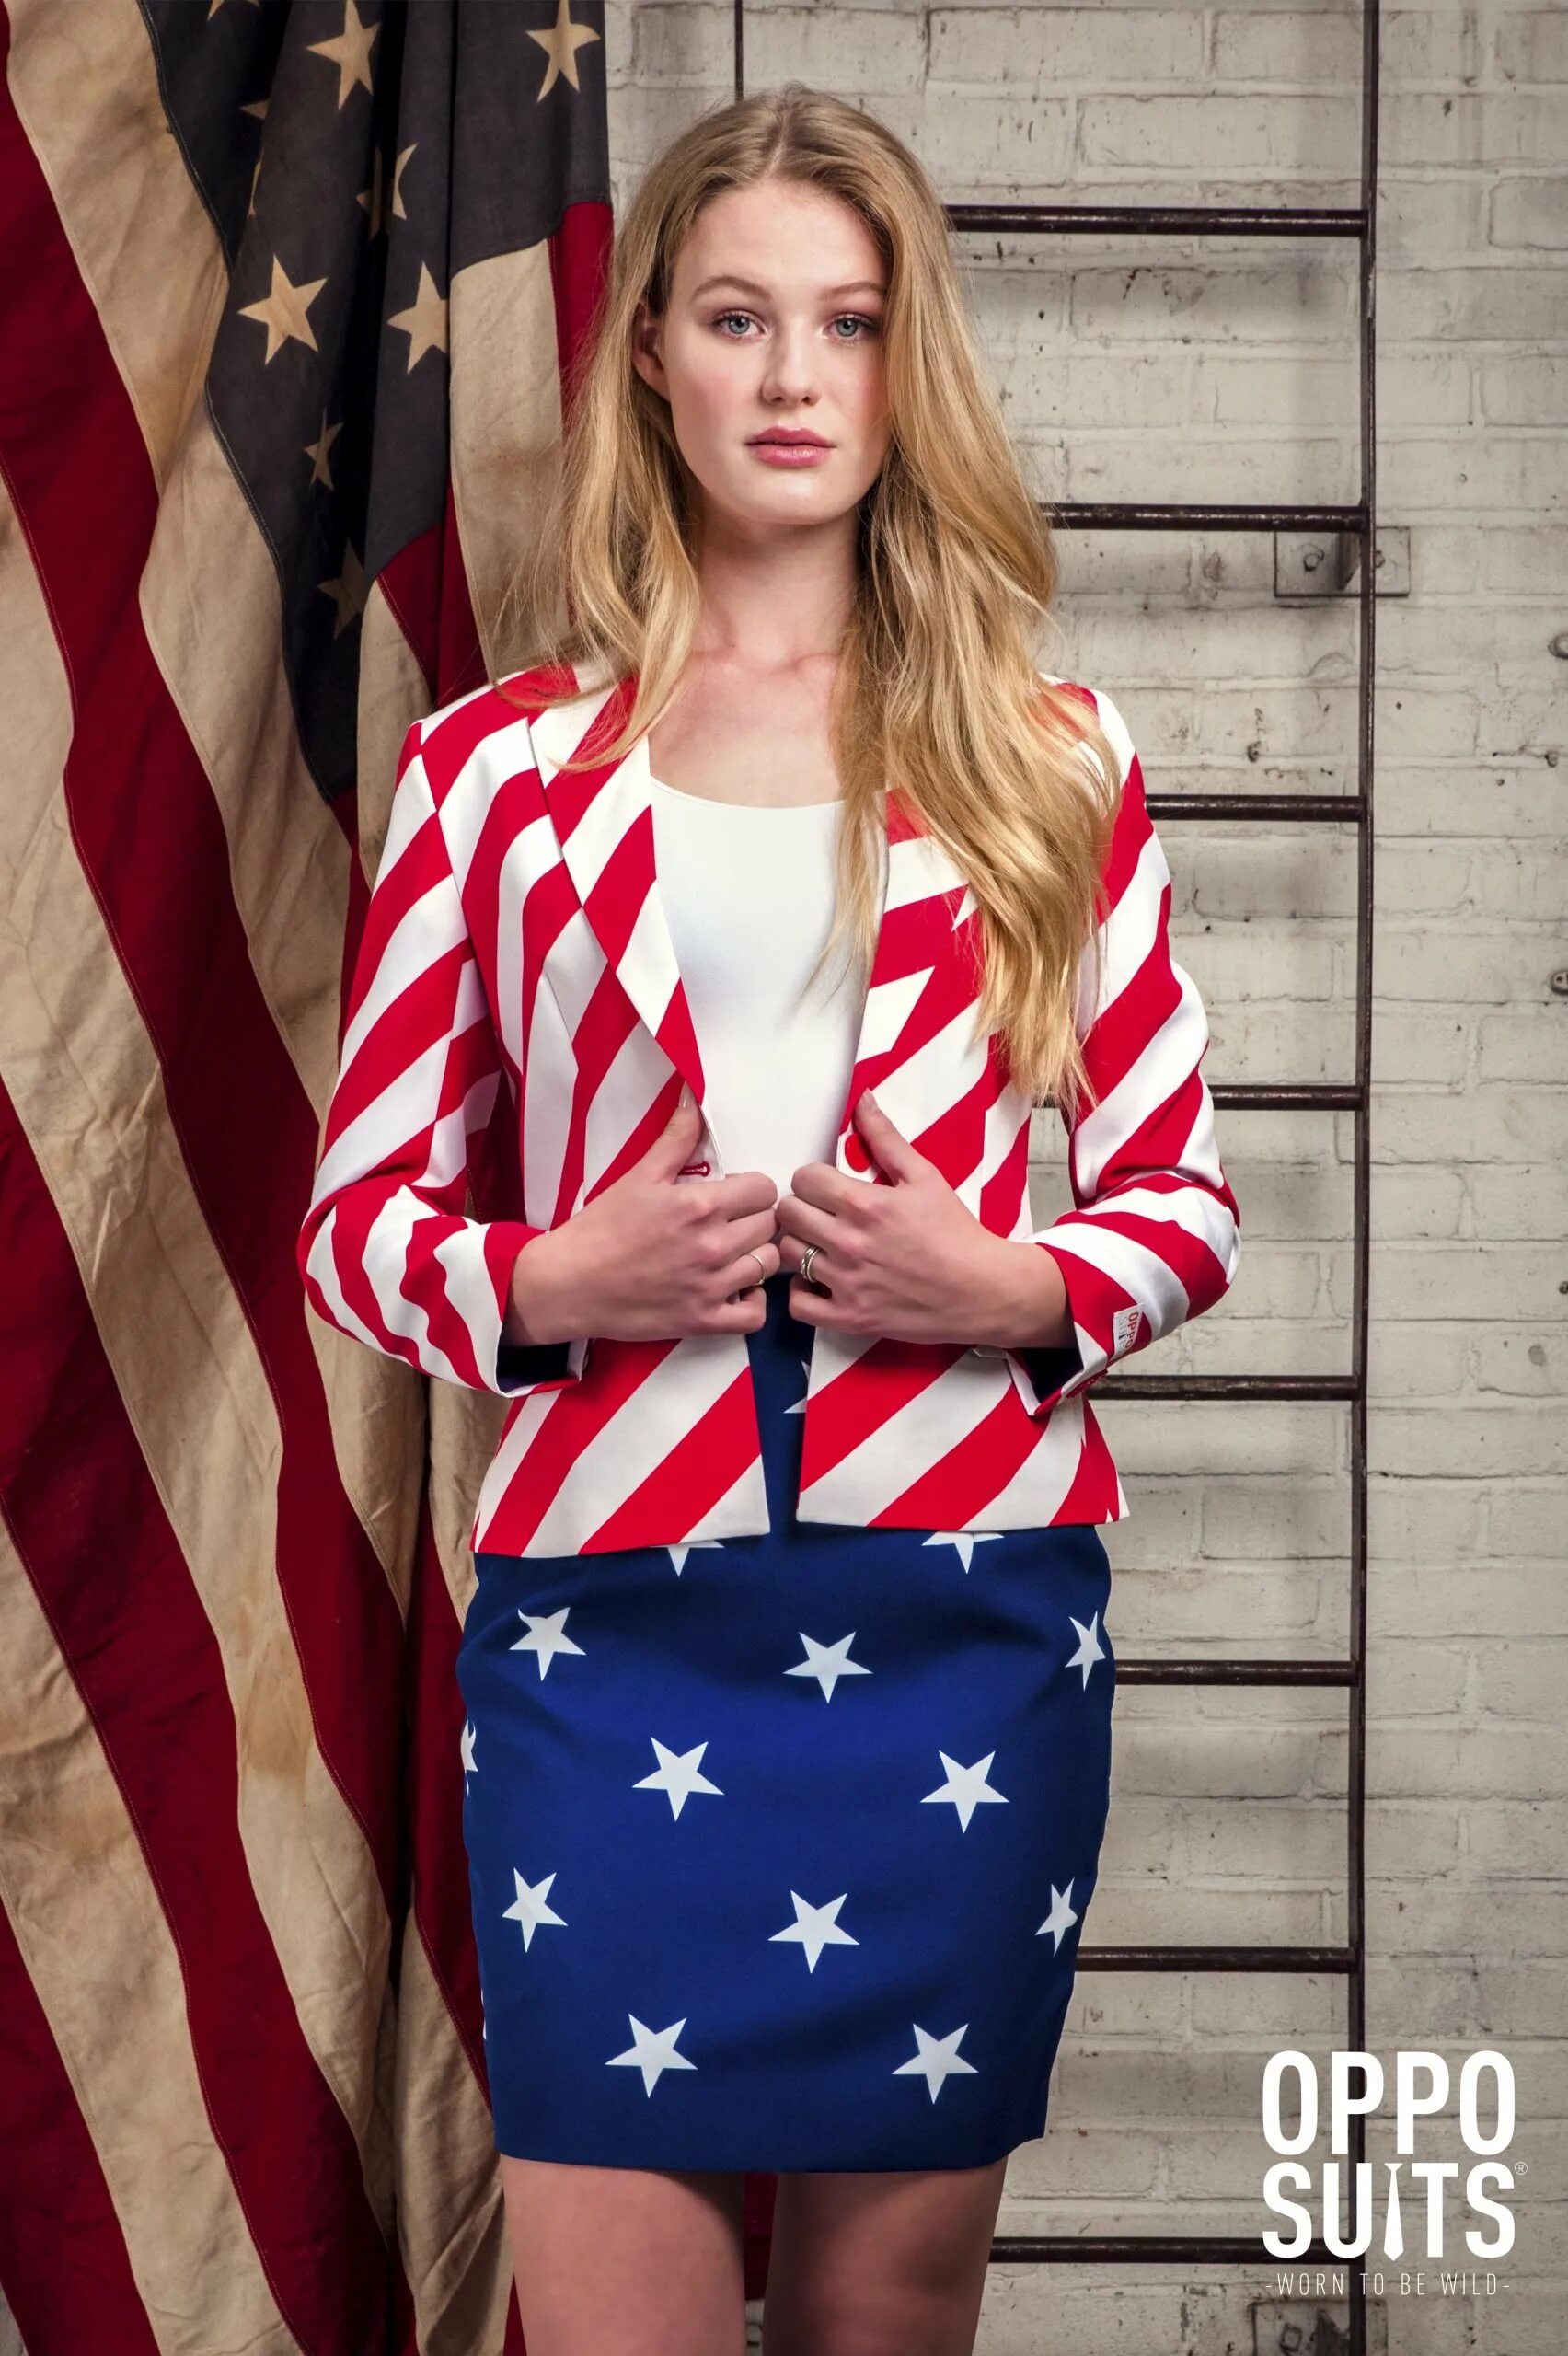 Usa герл. Кейт Американ. Американская одежда. Американский стиль одежды женский. США девушки.